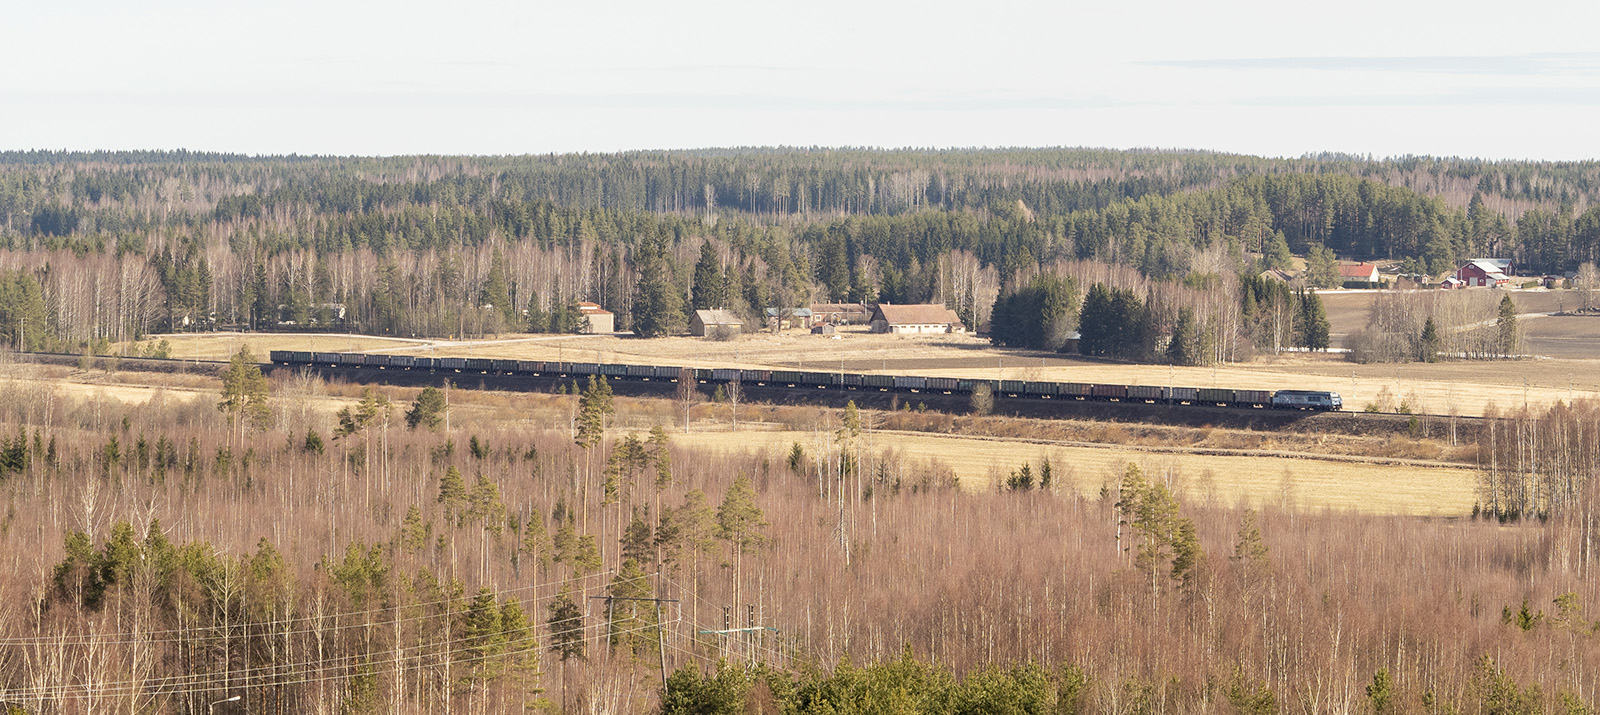 A train travels through Finnish countryside.